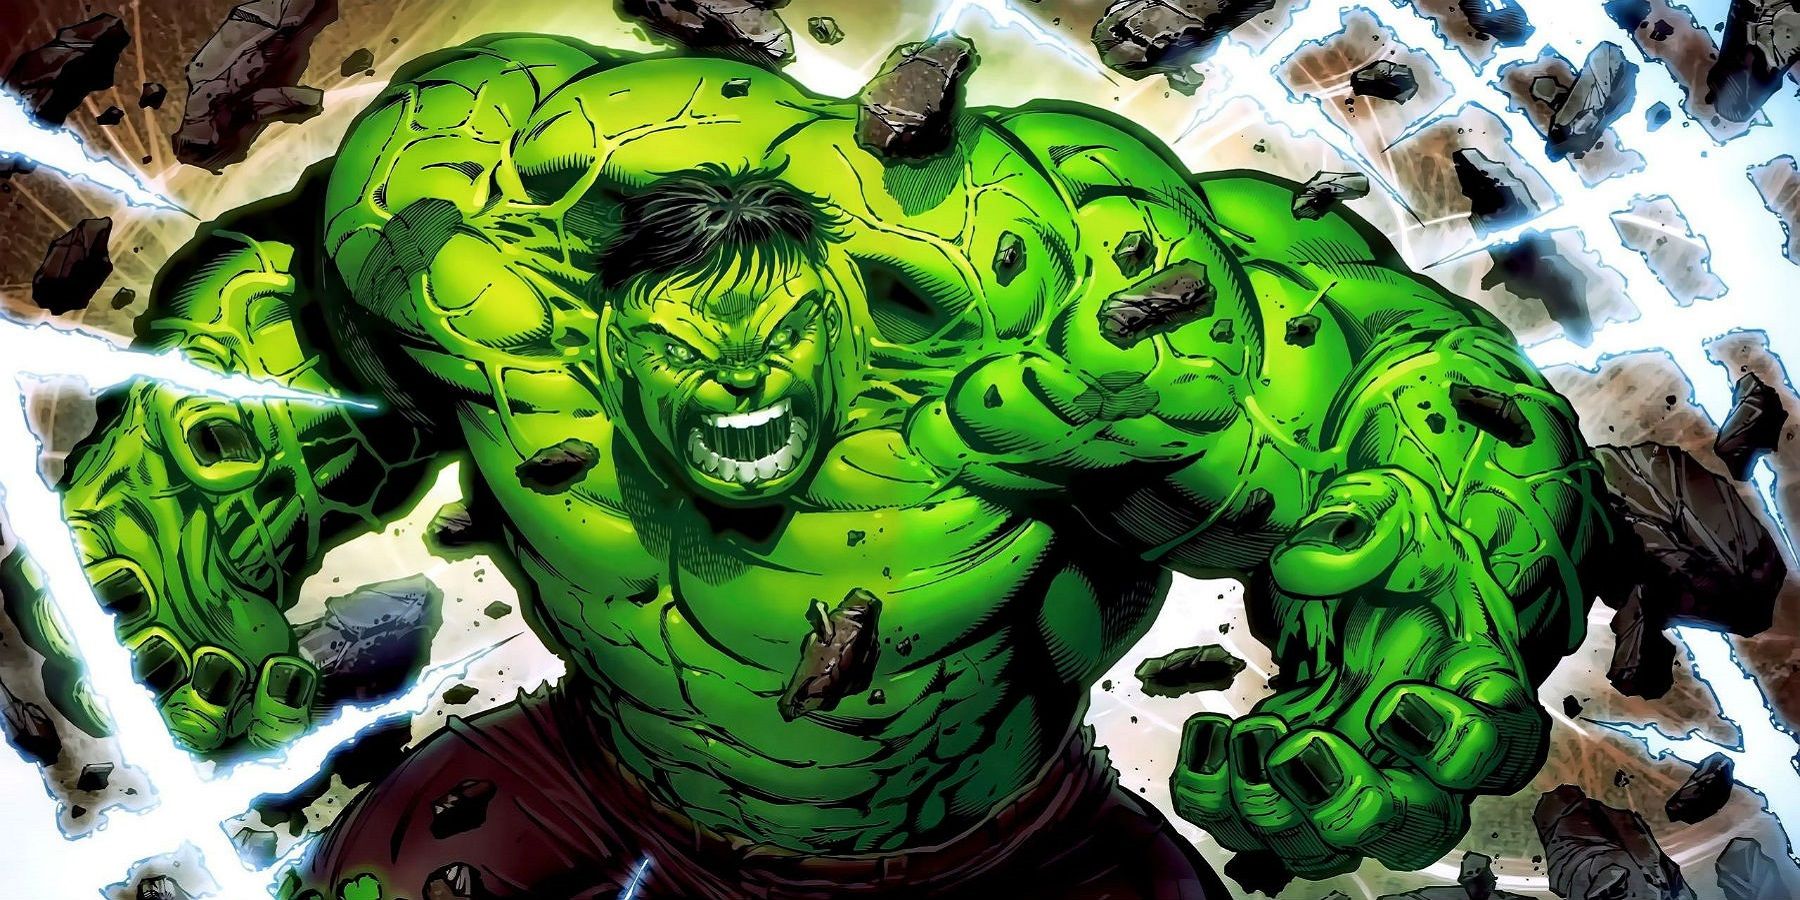 The Hulk smashing through a wall